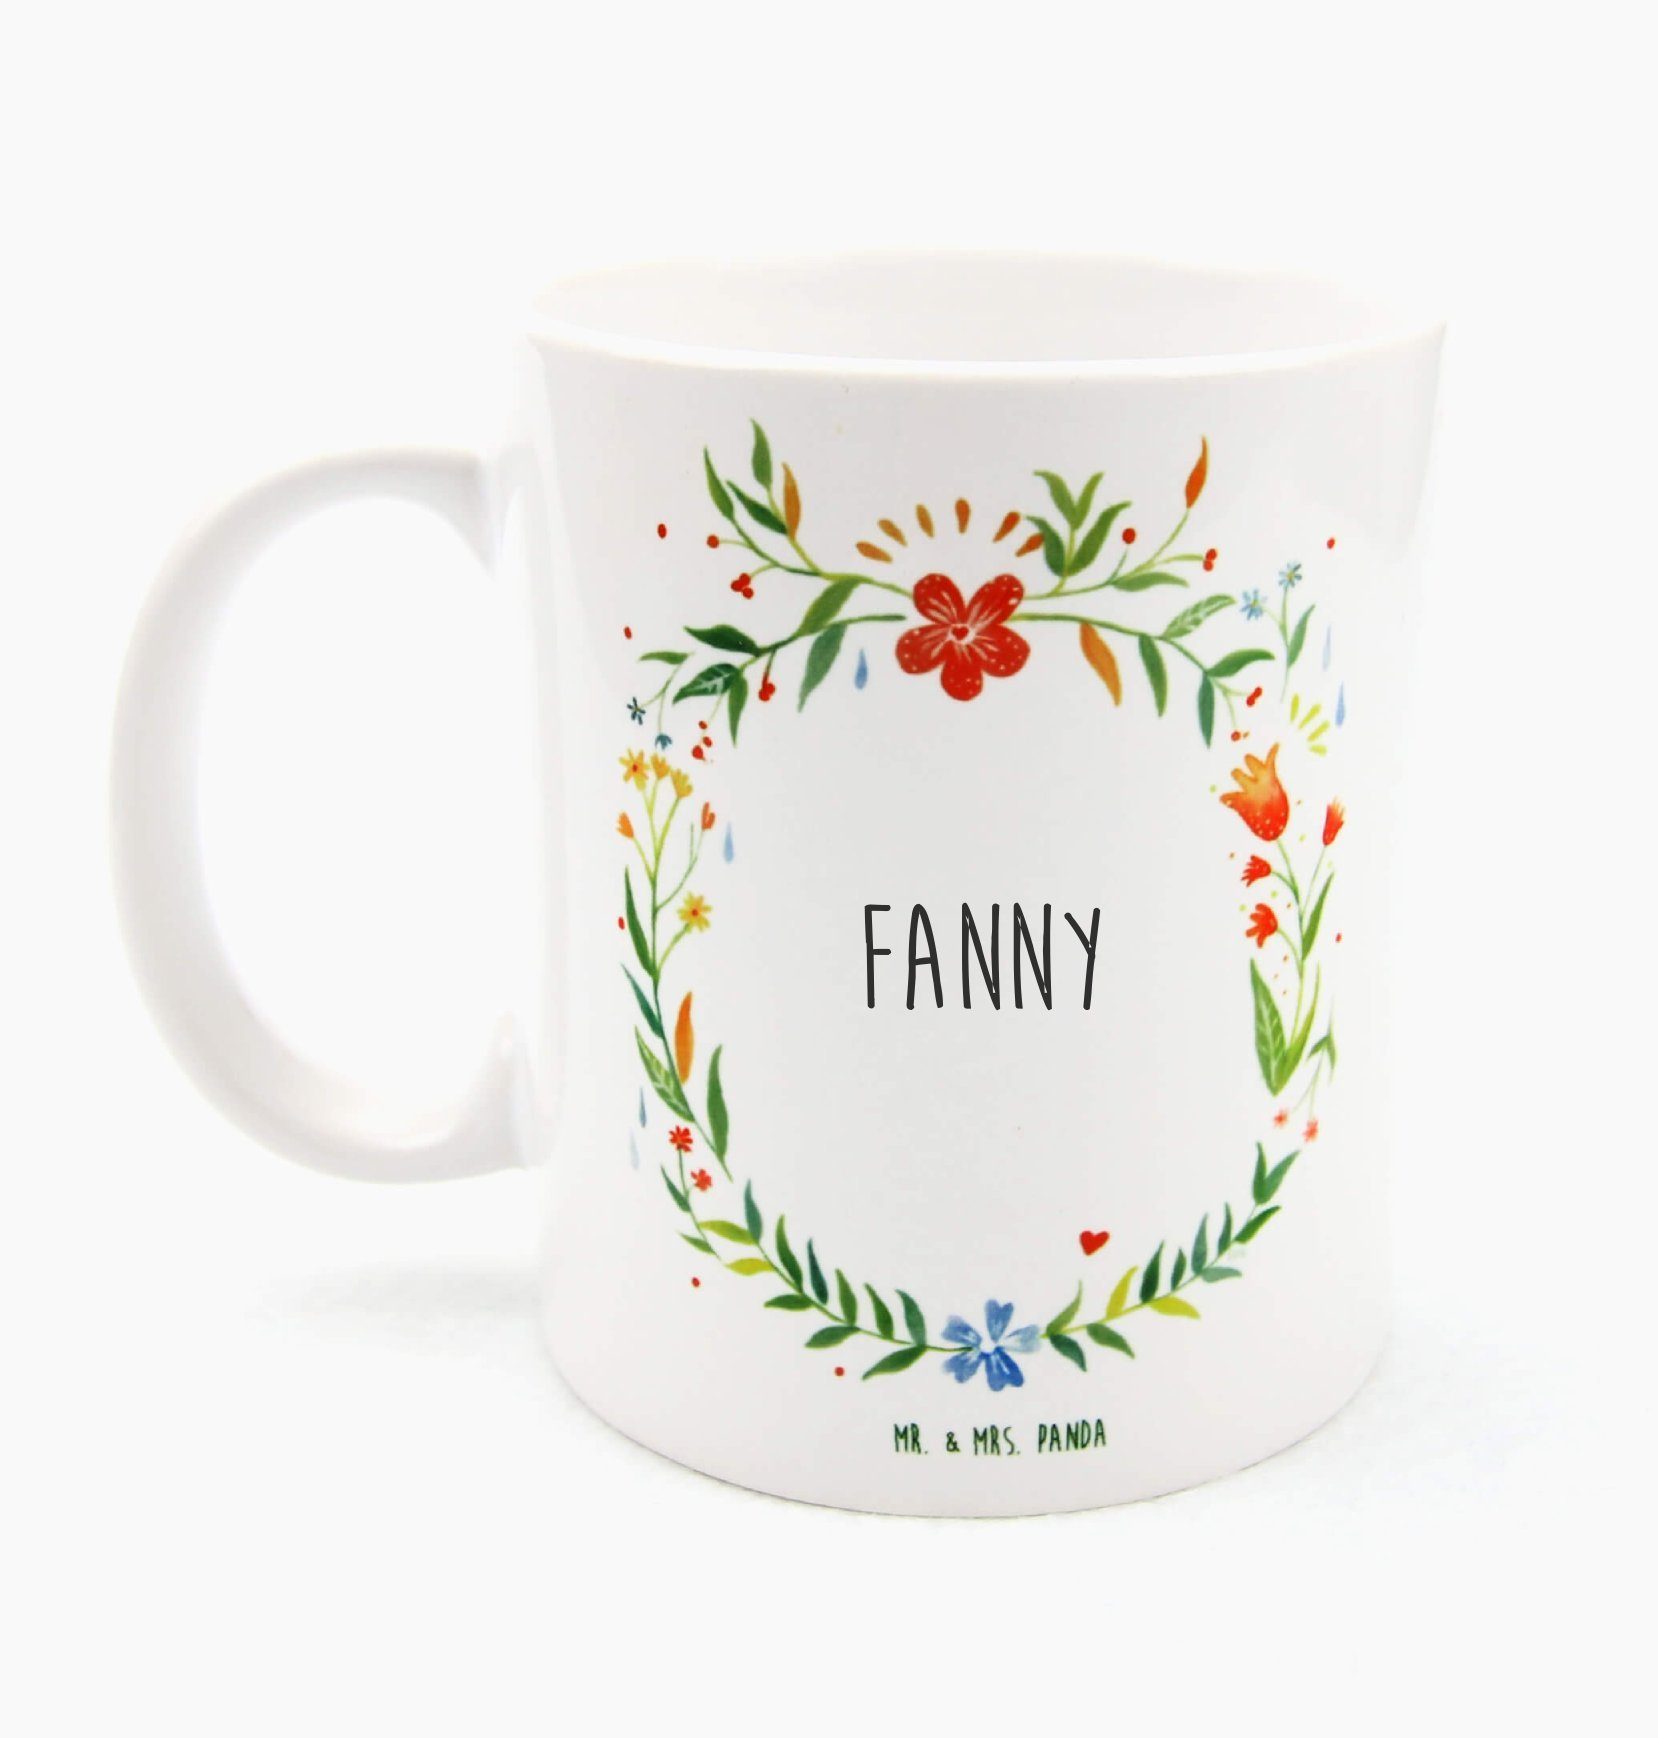 Mr. & Mrs. Panda Tasse Fanny - Geschenk, Tasse, Büro Tasse, Teebecher, Teetasse, Geschenk Ta, Keramik